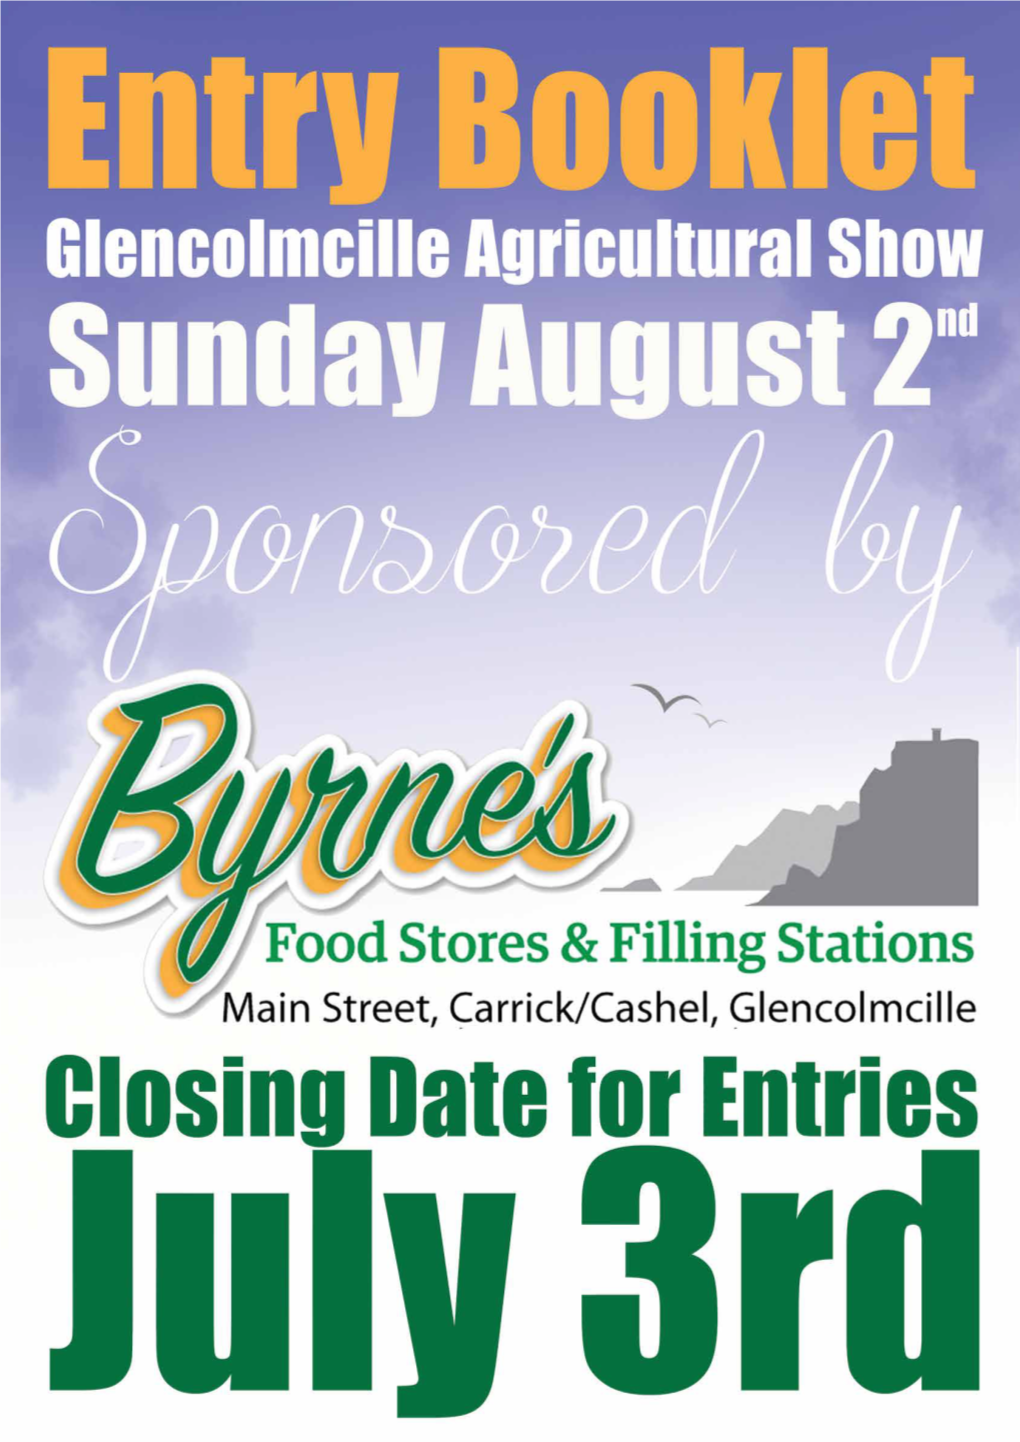 Glencolmcille Agricultural Show 2015